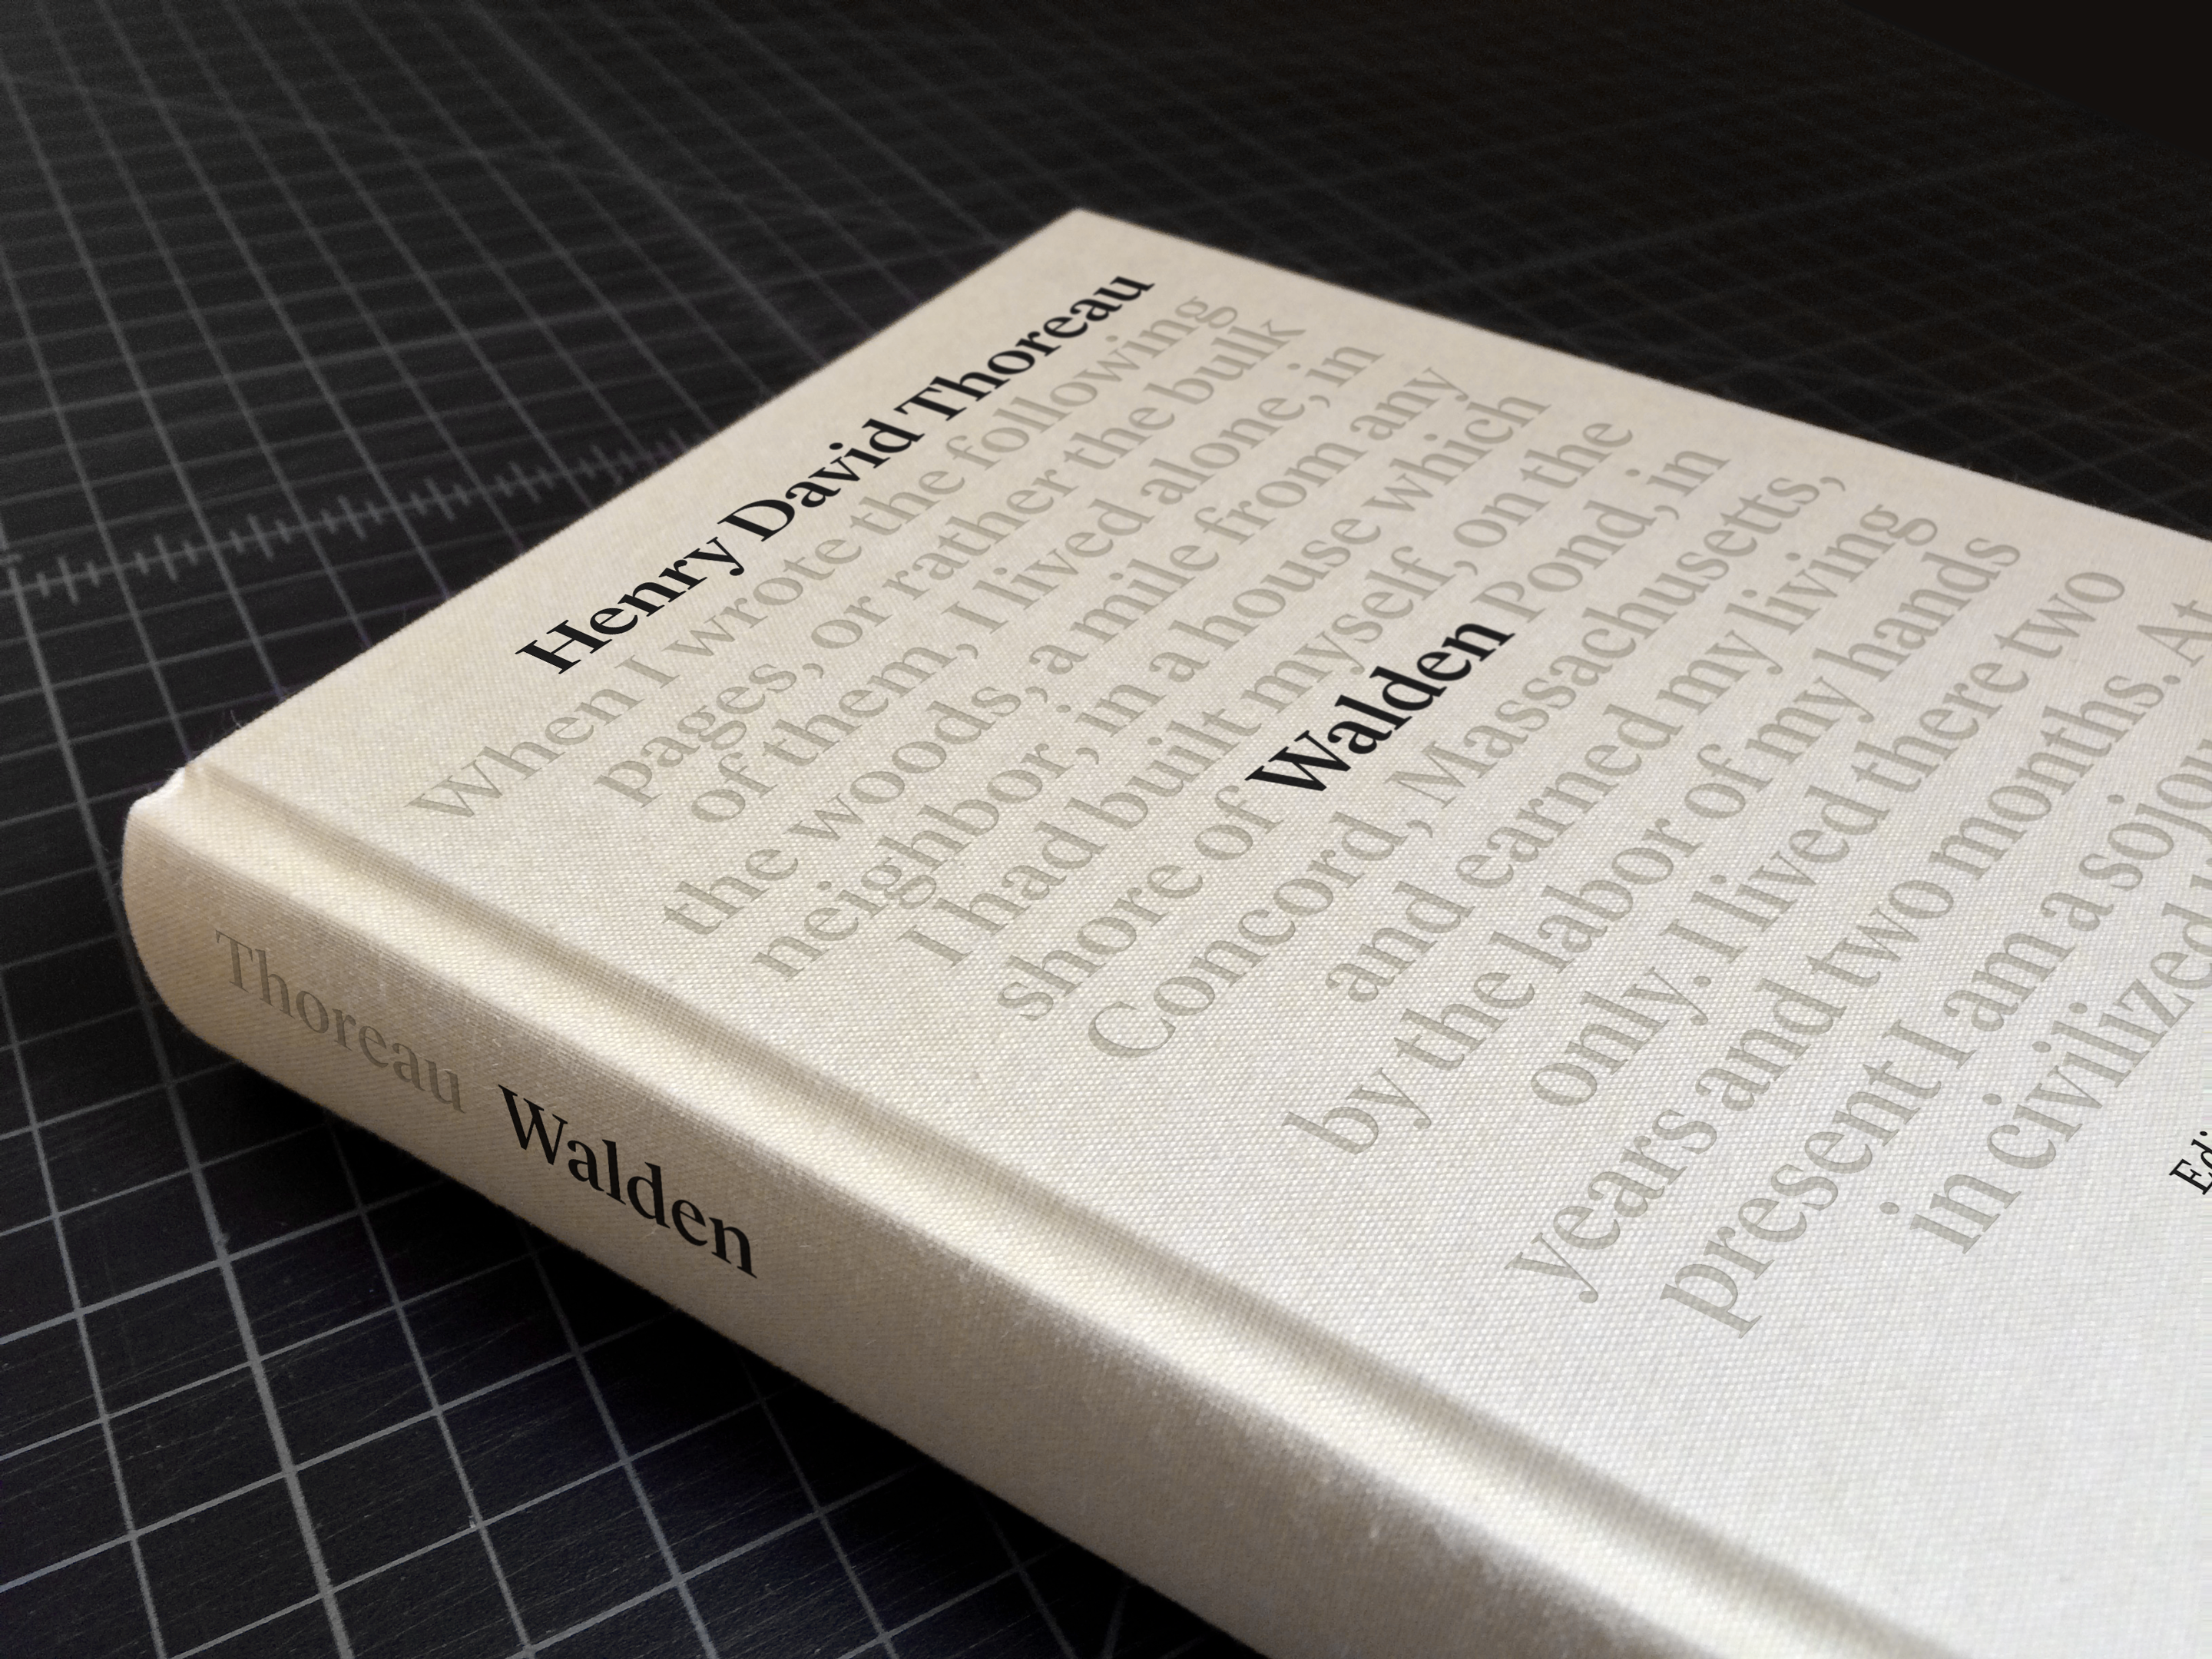 The New (Old) “Walden”. “Prediction is very difficult…, by Matt Steel, Matt Steel